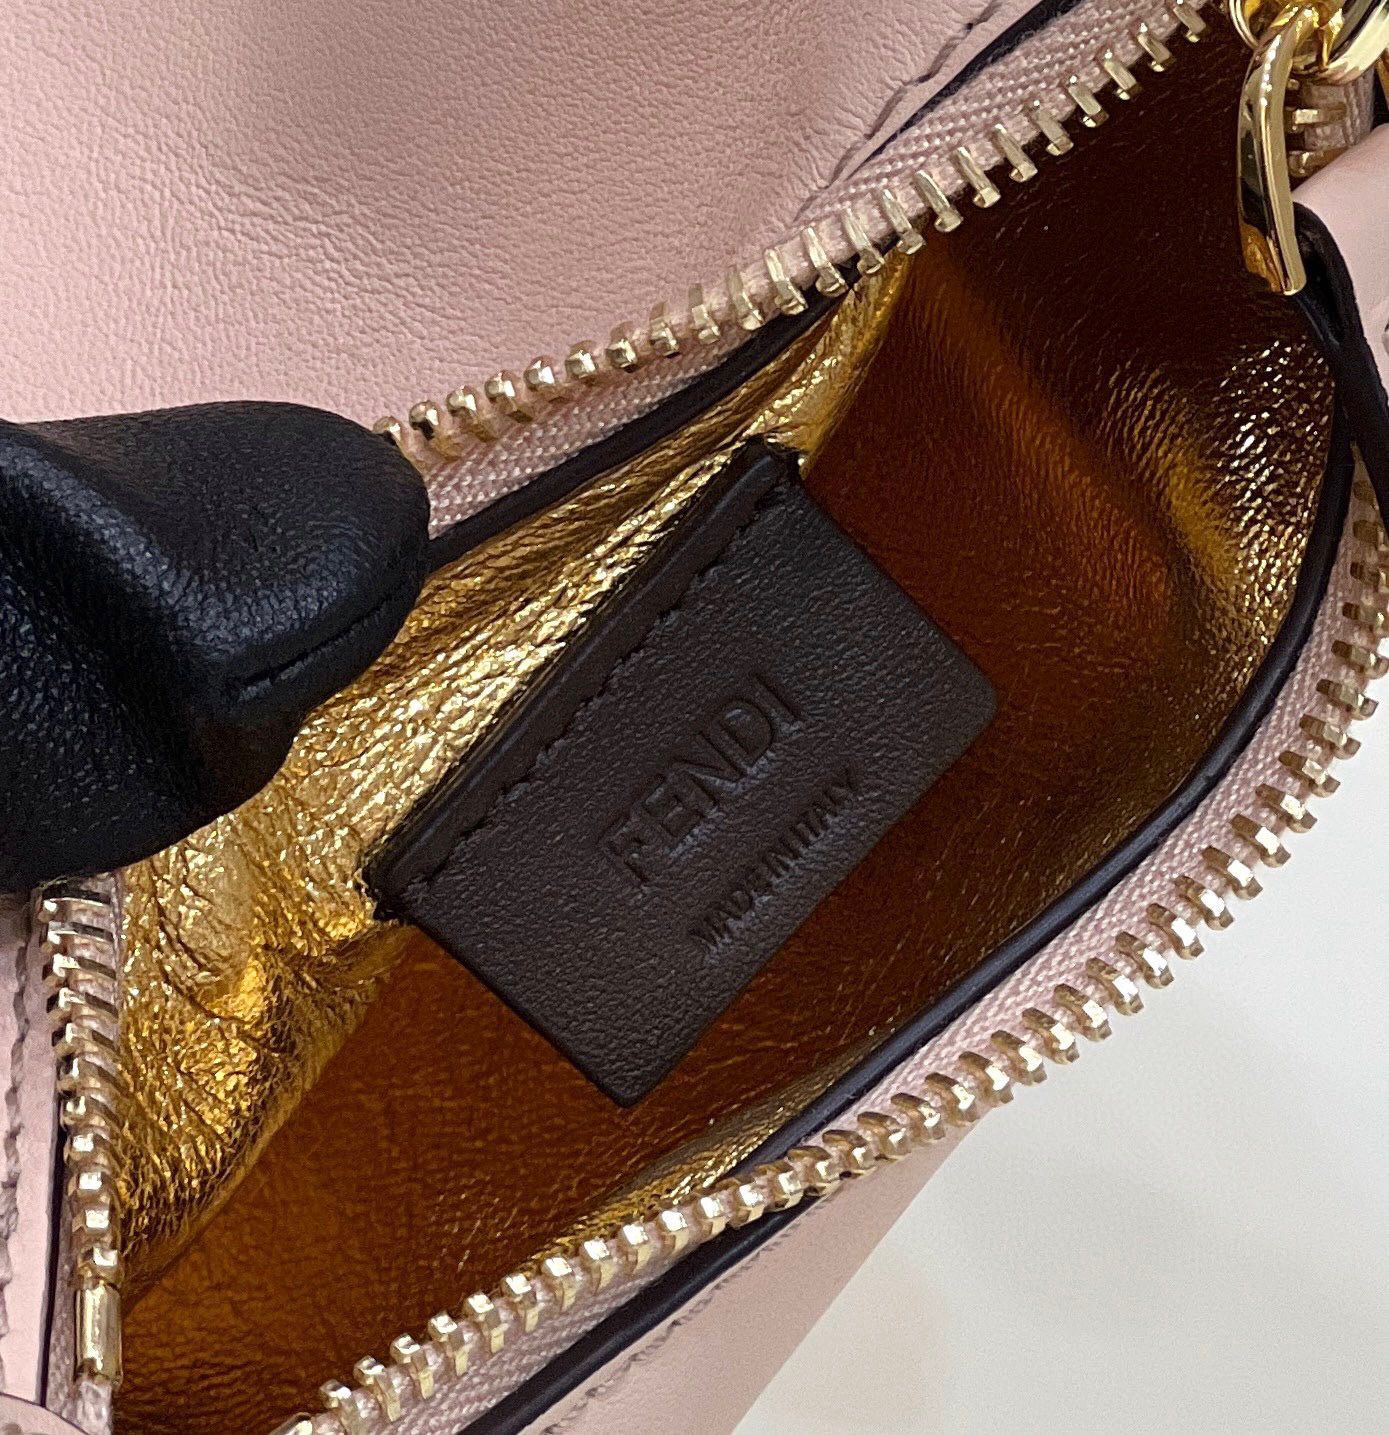 Fendi Praphy Original Leather Big Logo Bag 80056M 80056S Pink